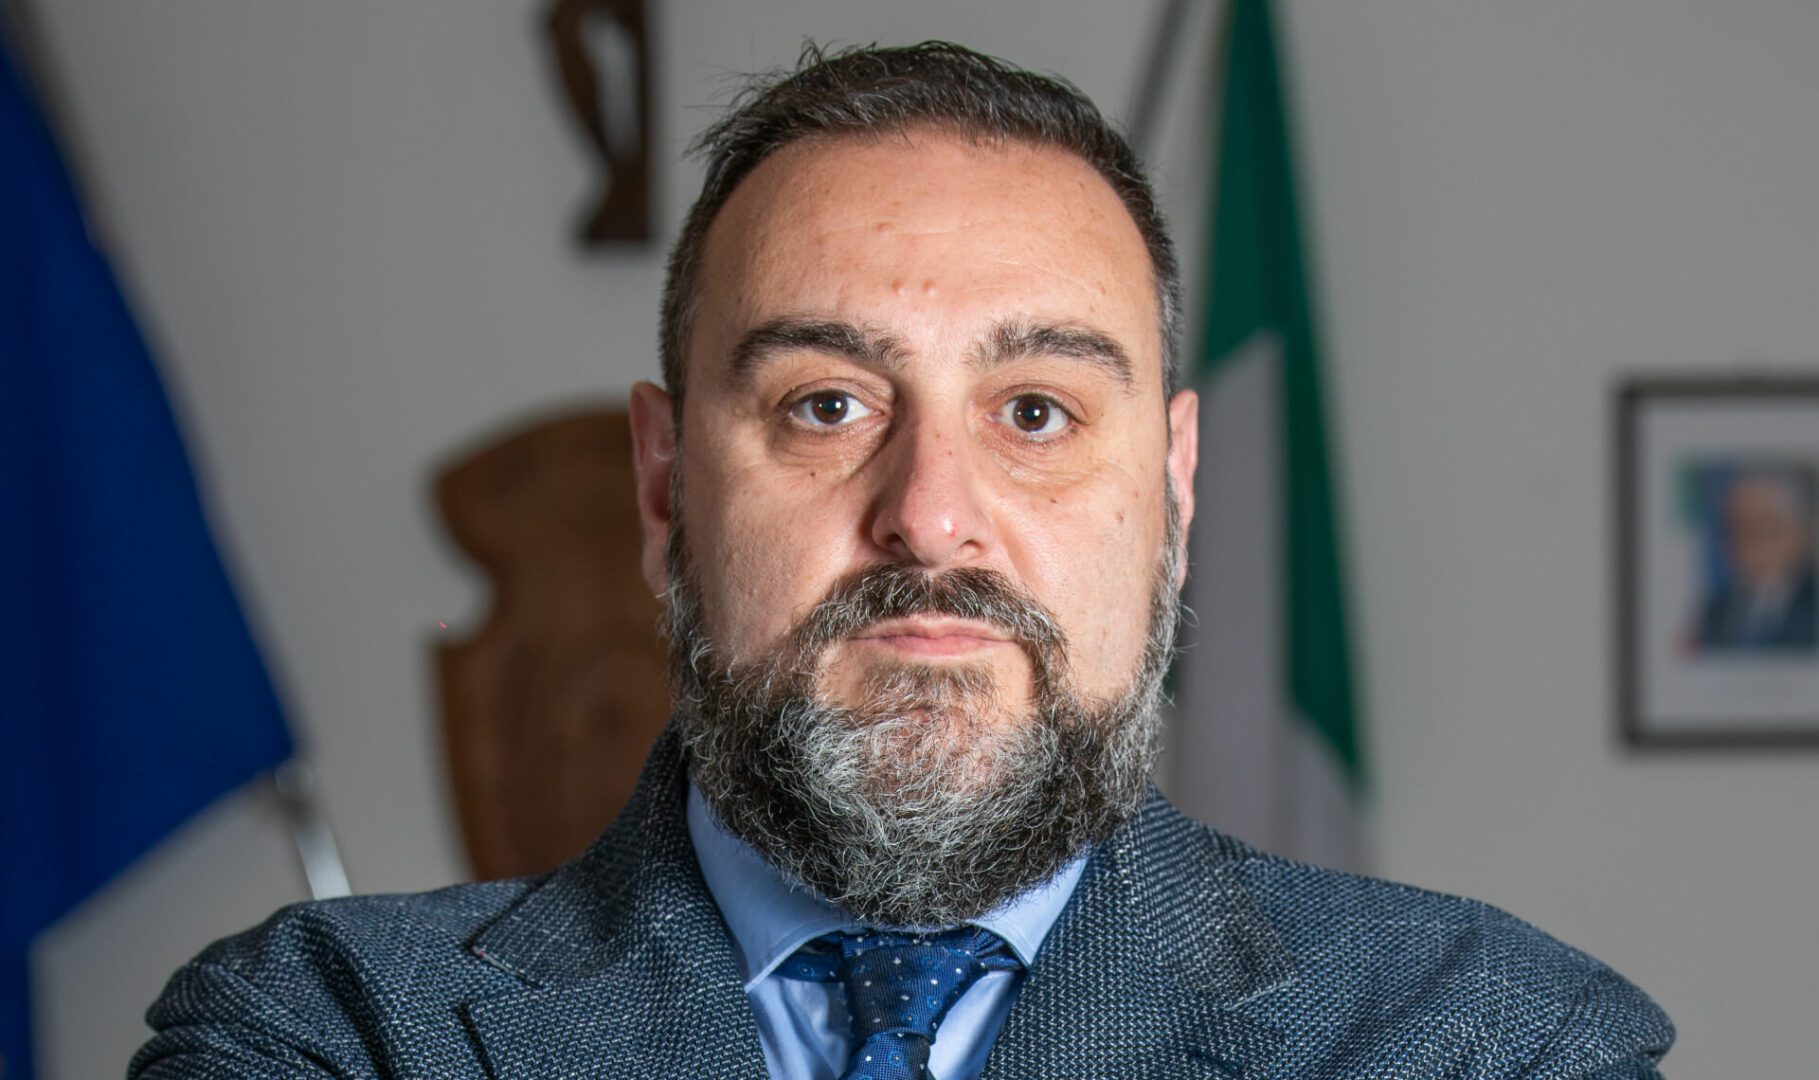 Francesco Nutricati